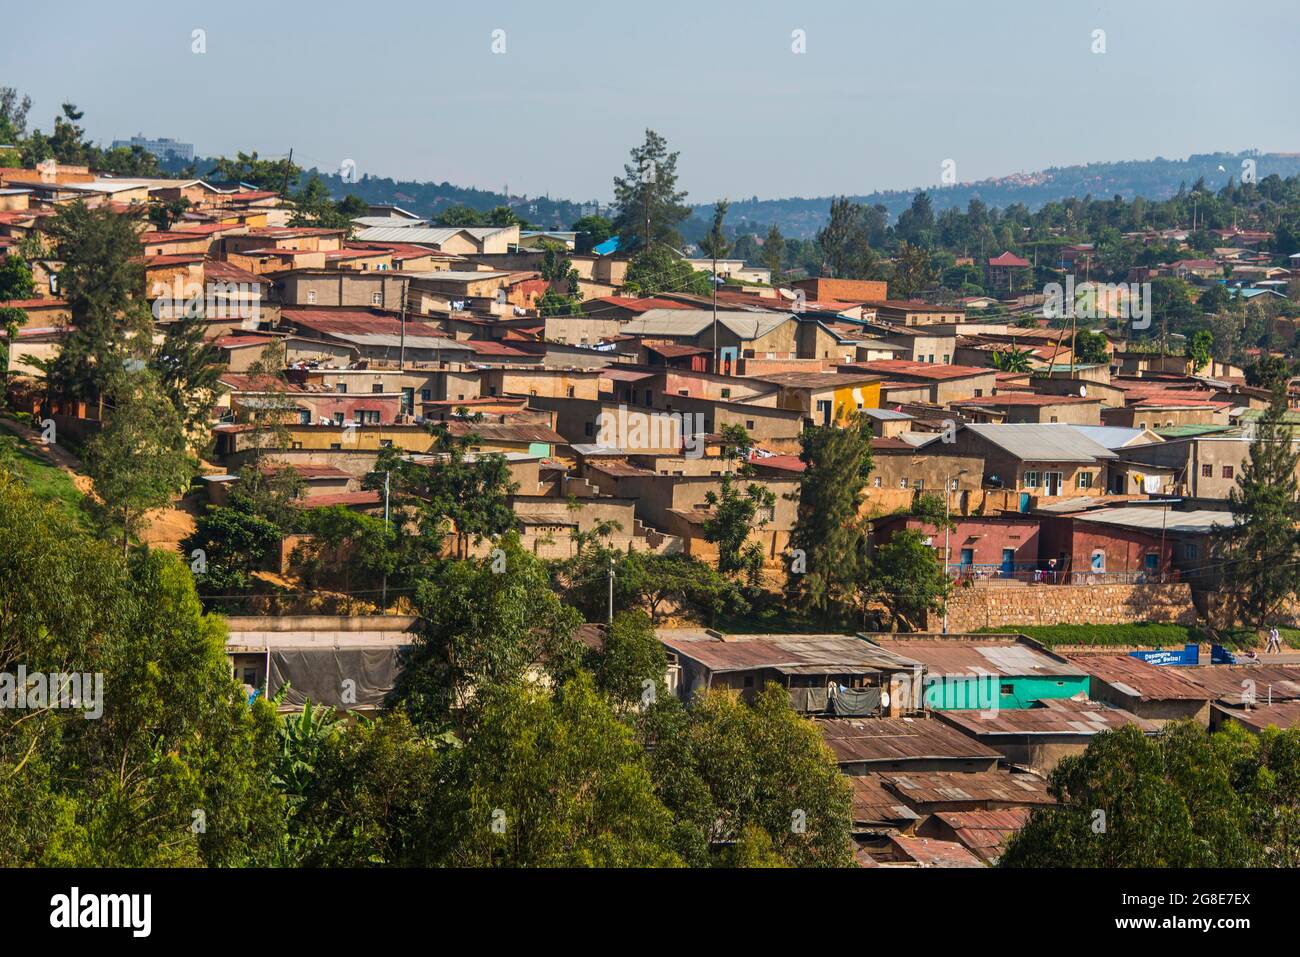 Los barrios de tugurios de kigali, Rwanda, África Foto de stock